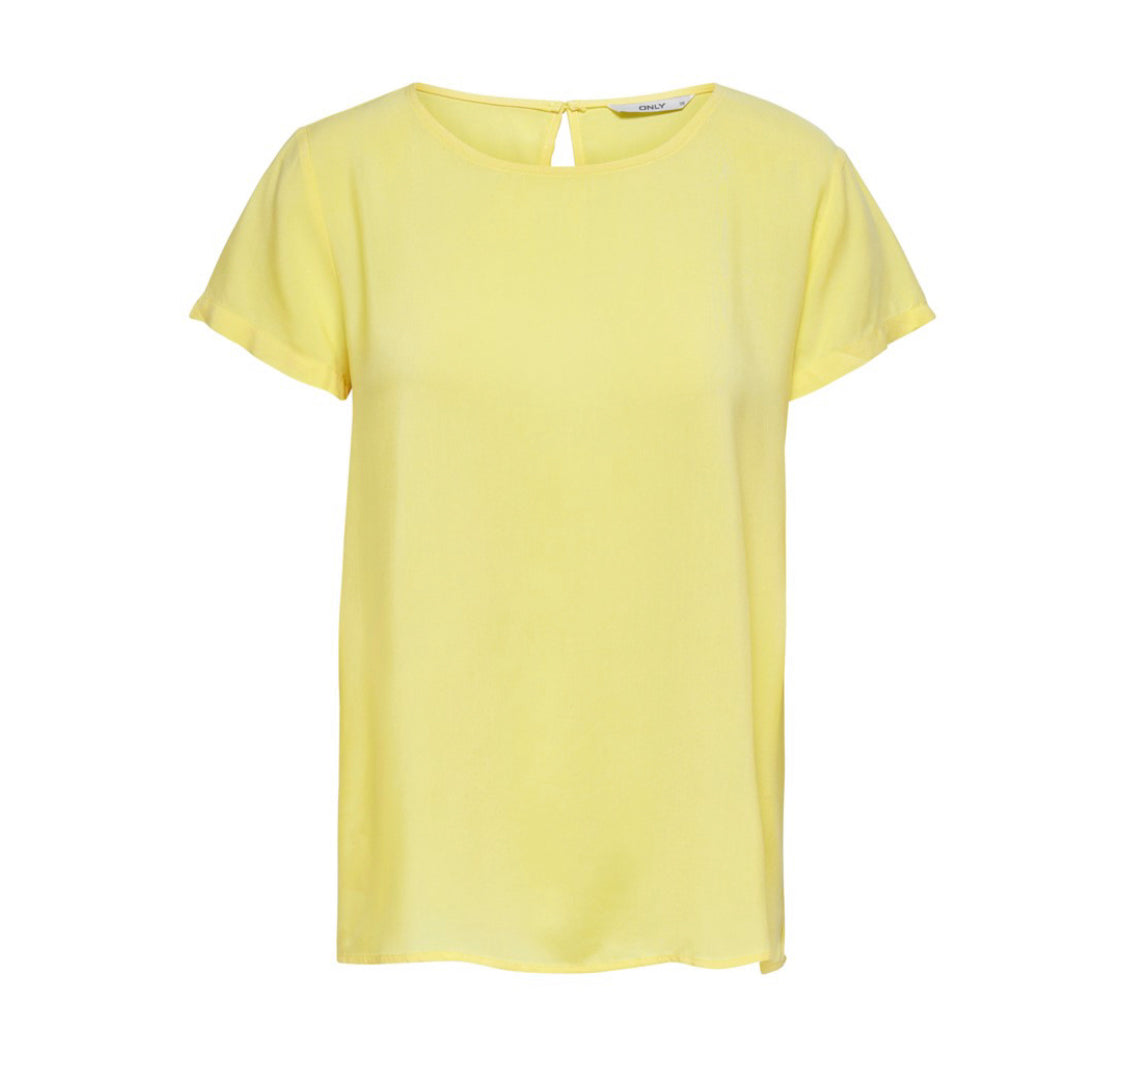 Blusa mujer manga corta color amarillo detalle lazo